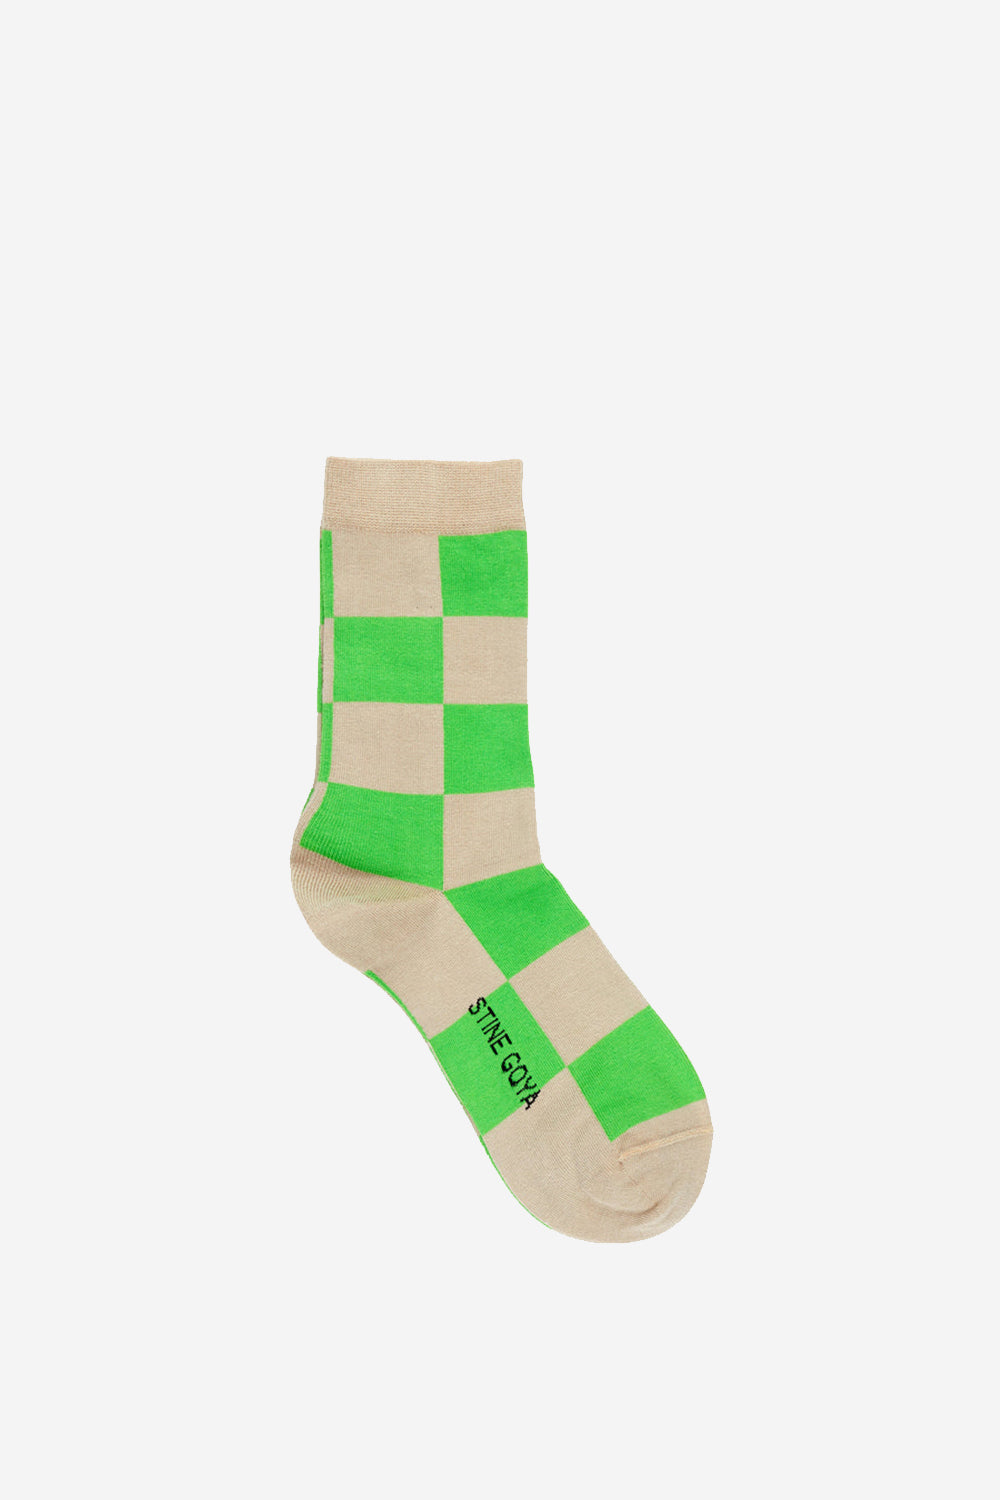 Iggy Socks